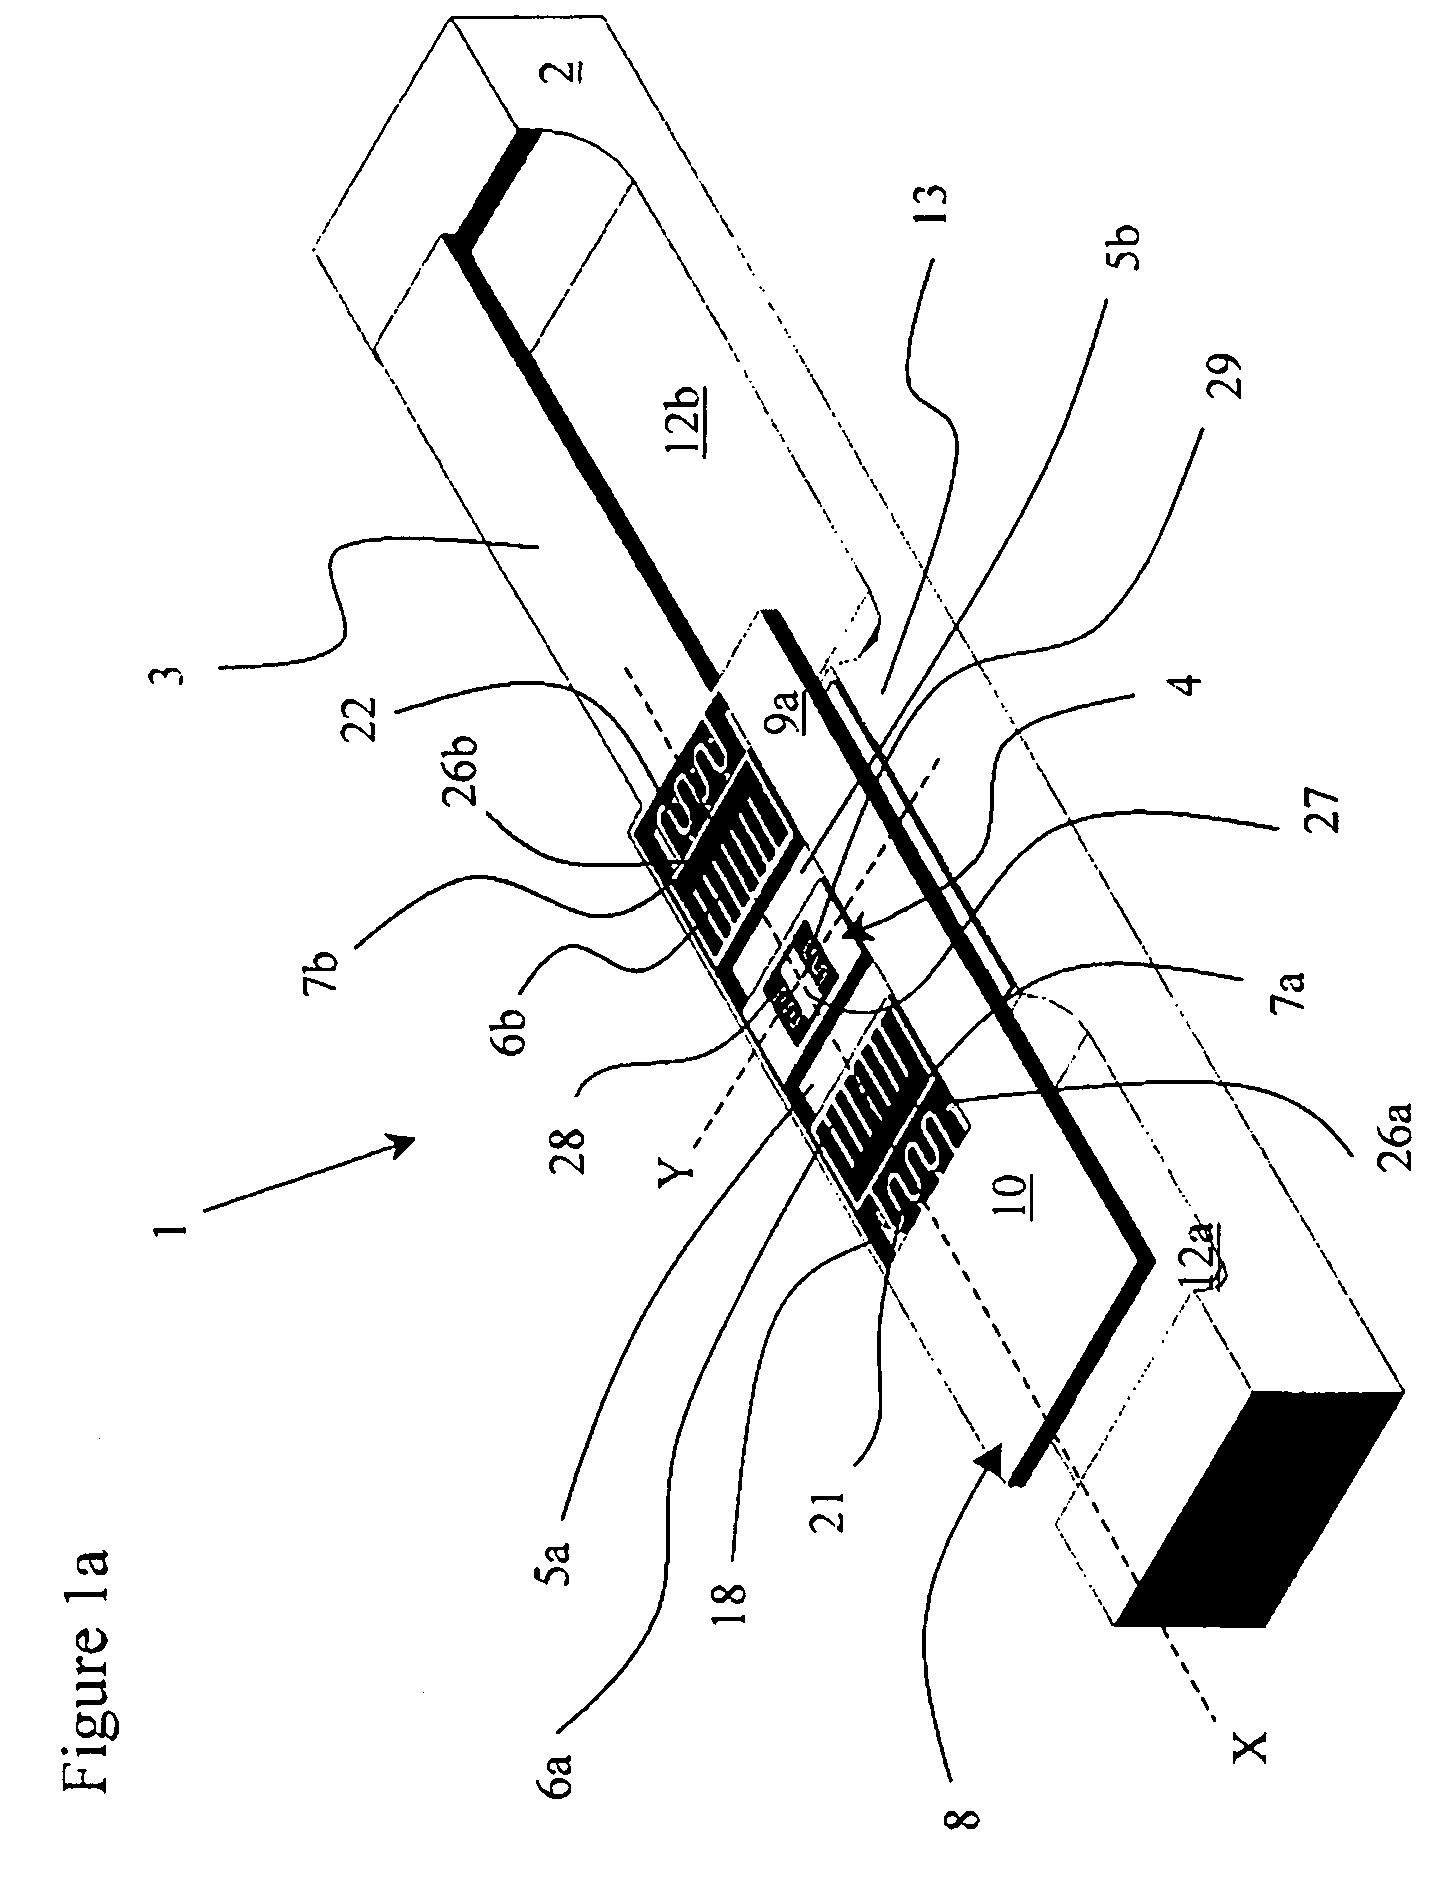 MEMS device with an angular vertical comb actuator